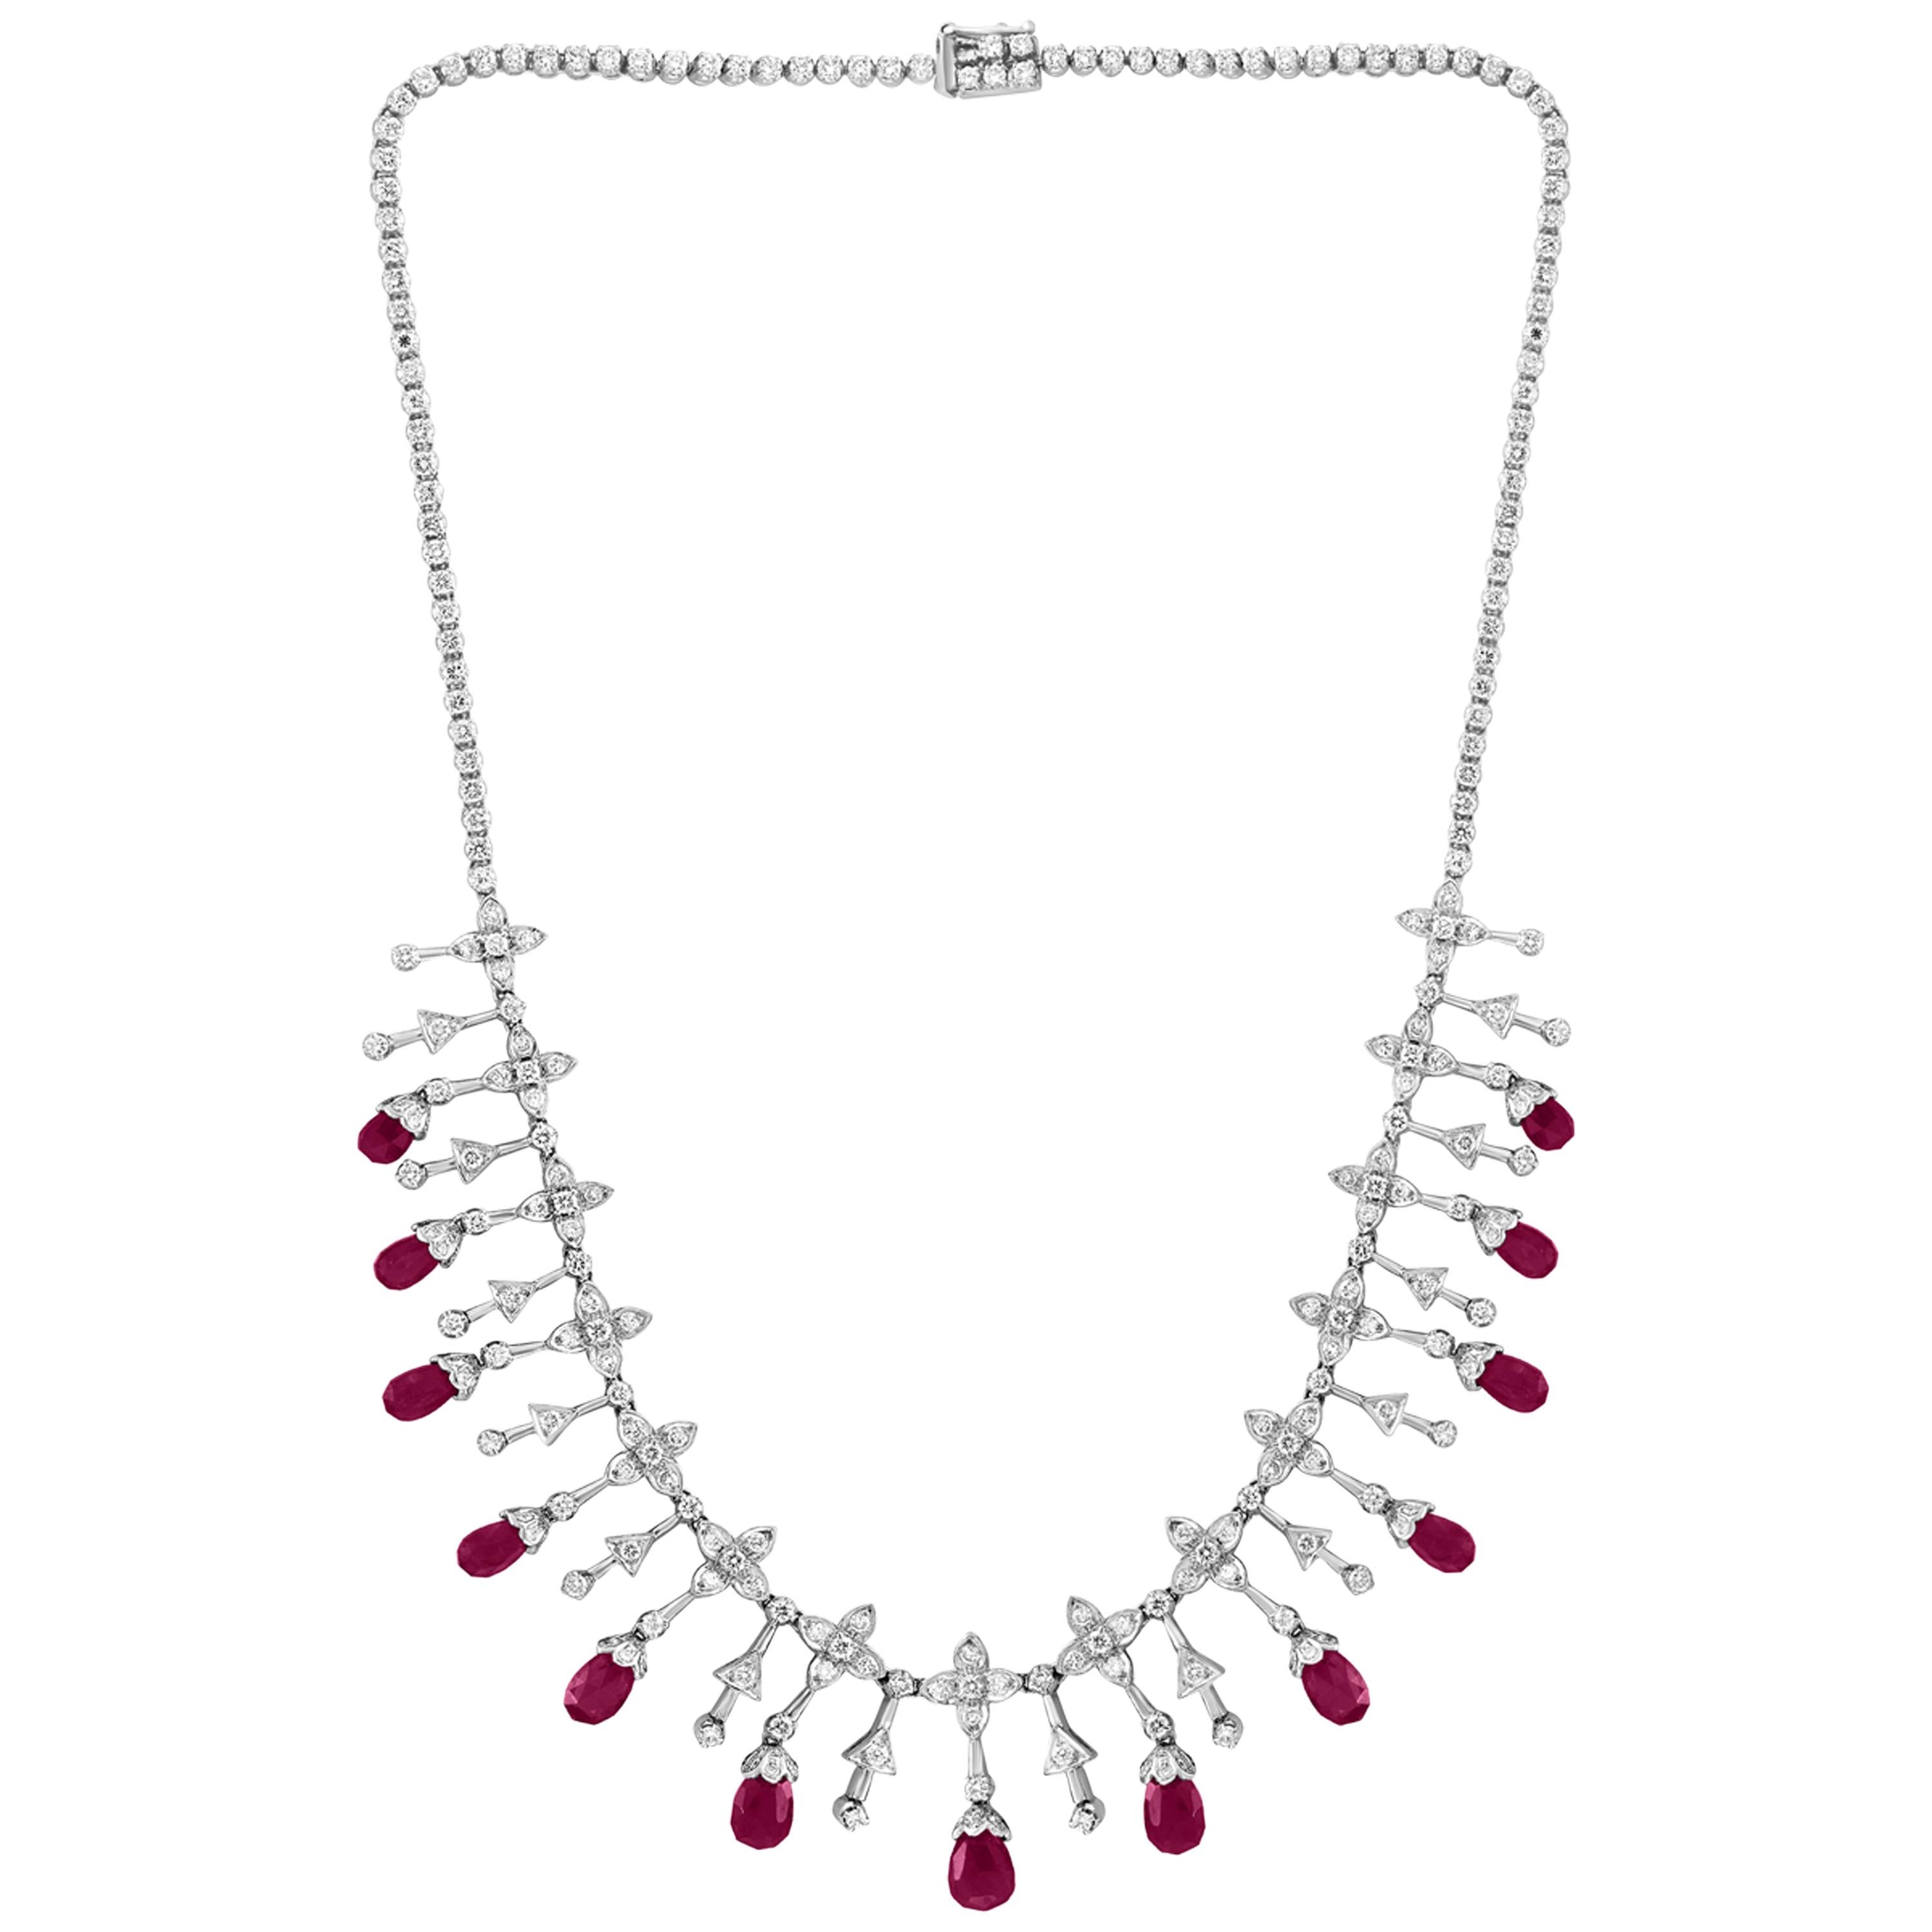 18 Ct Natural Ruby Briolette & 8 Ct Diamond Necklace 18 Karat White Gold, Estate For Sale